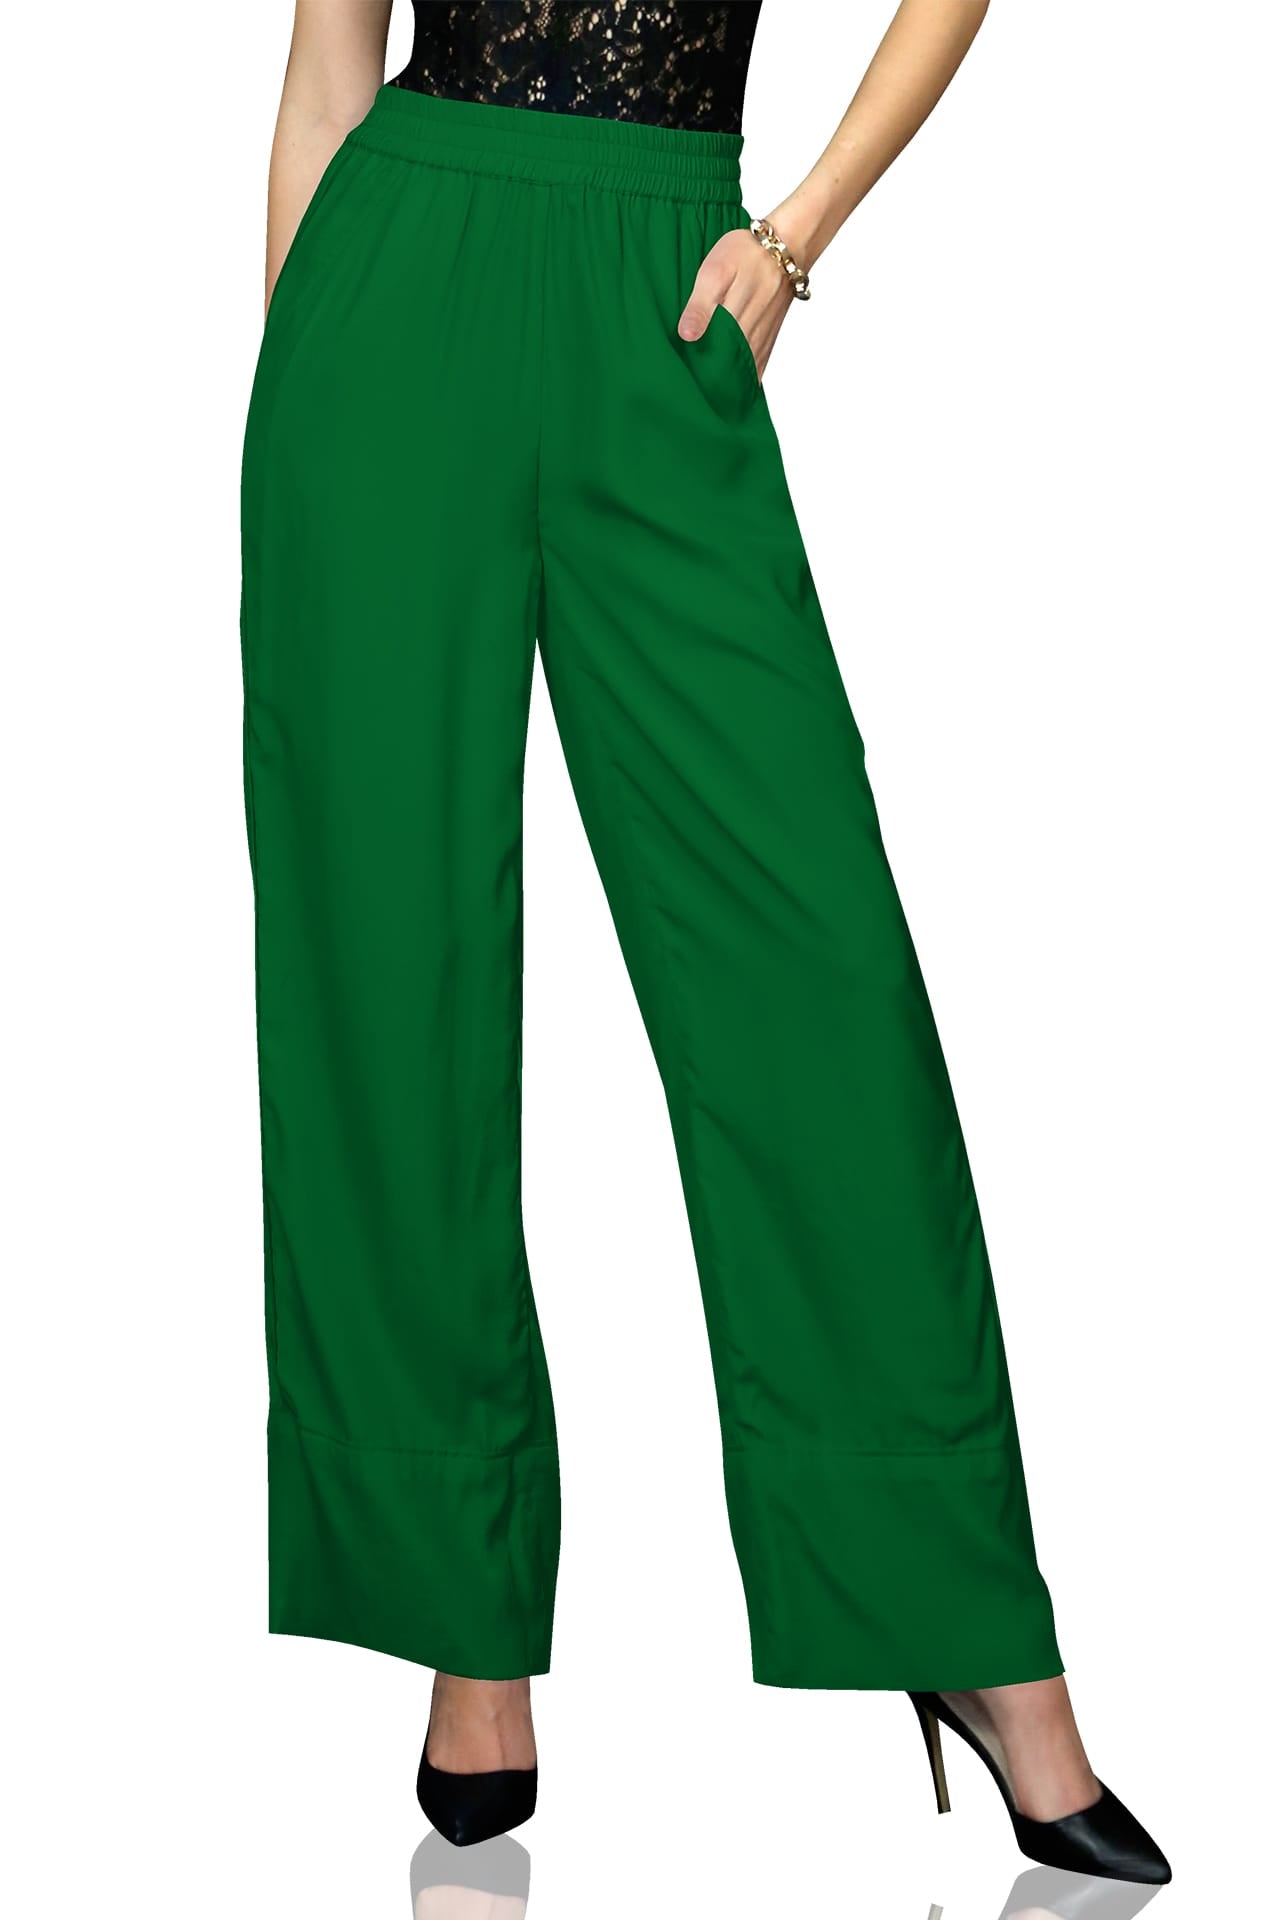 "plazzo pant for women" "Kyle X Shahida" "green wide leg pants" "plazzos for women"